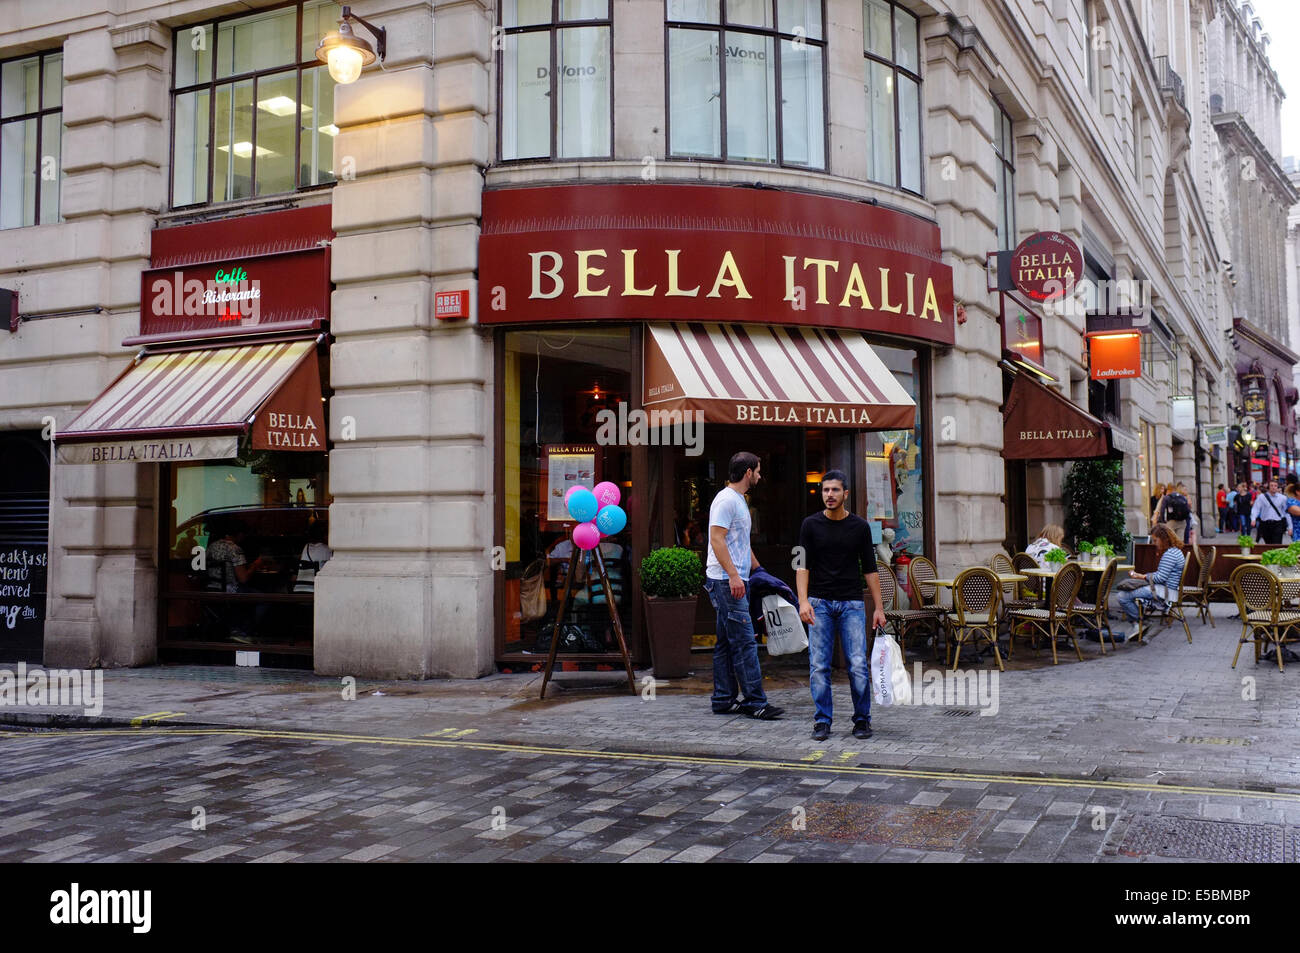 BELLA ITALIA restaurant in London Stock Photo